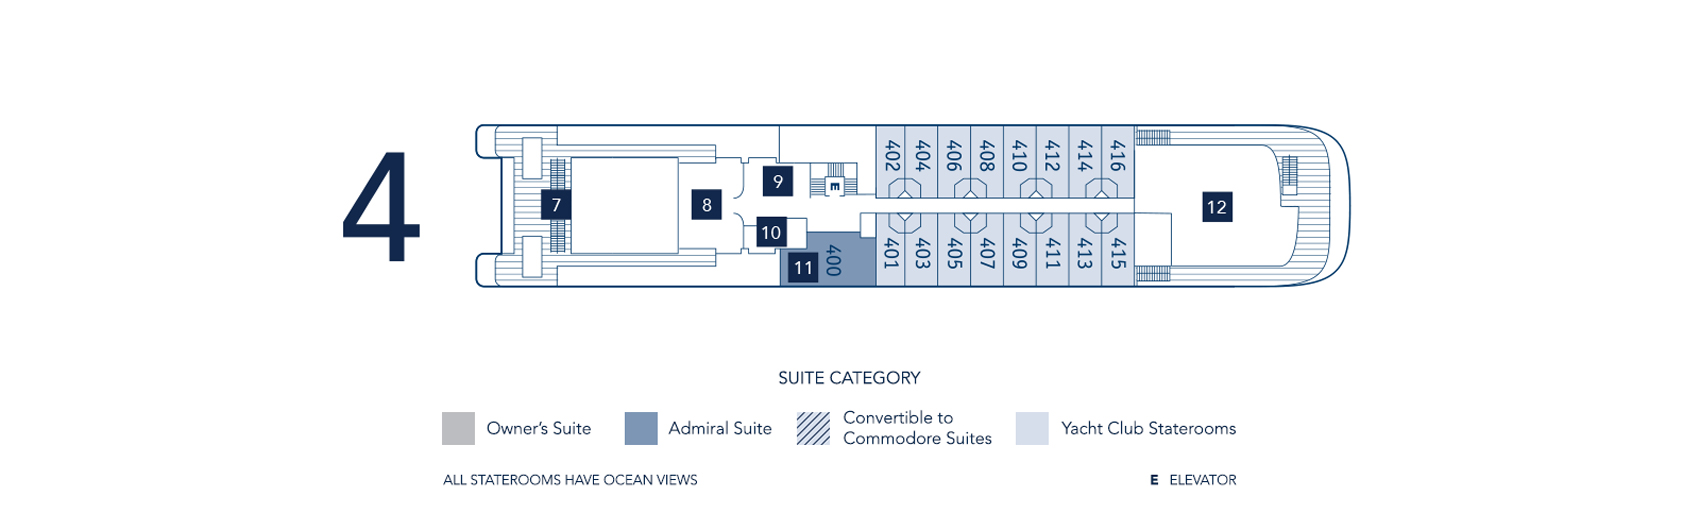 seadream yacht deck plan